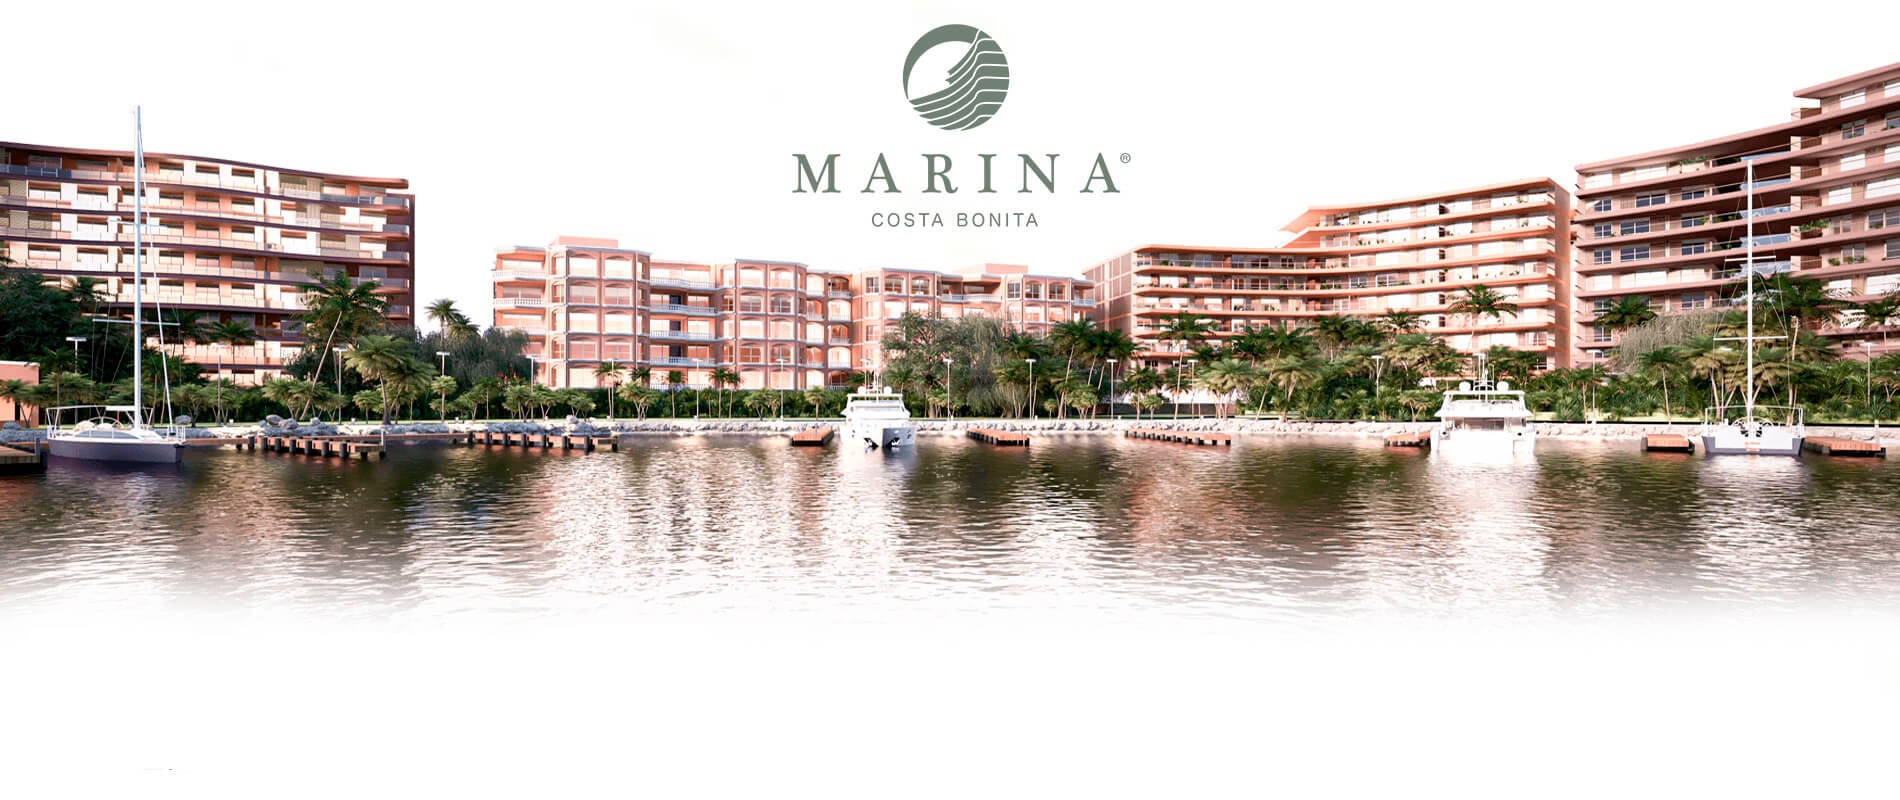 The "Zero Price" phase of Marina Costa Bonita is here!